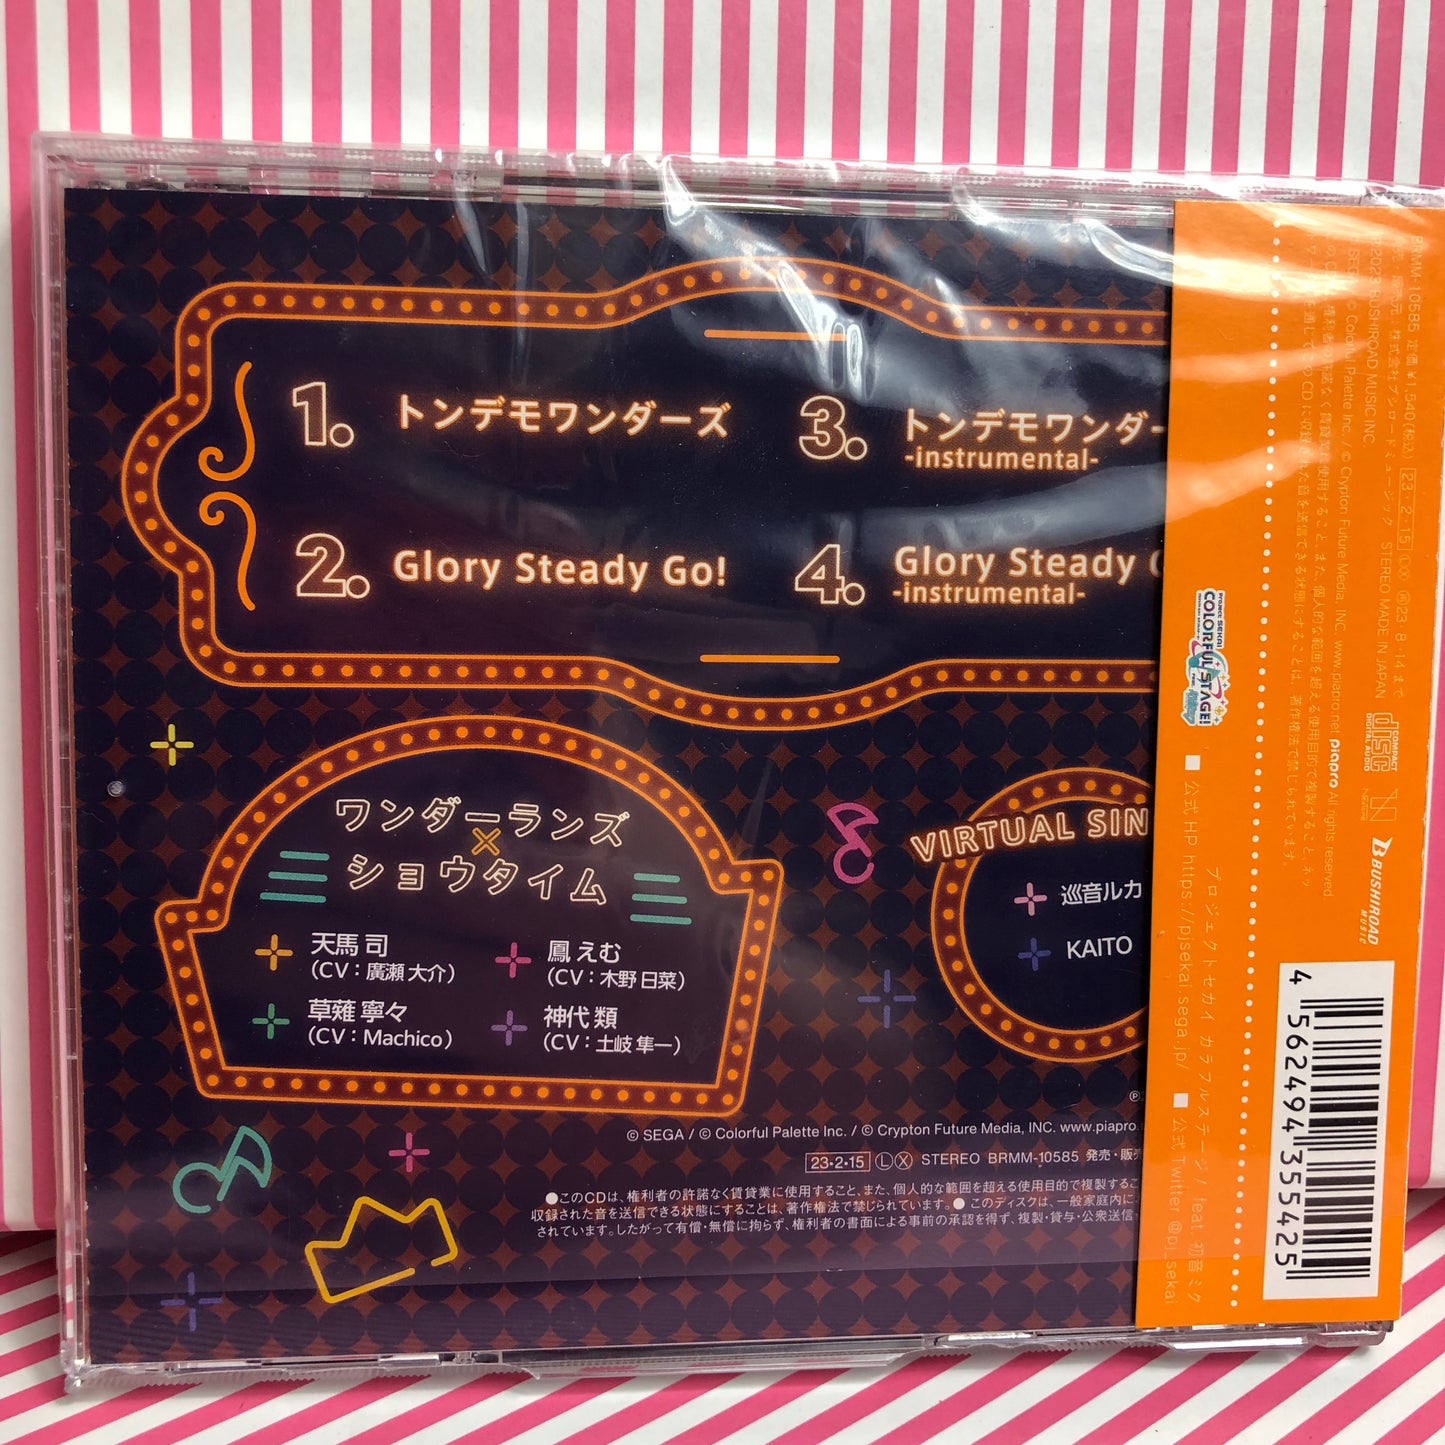 Wonderlands x Showtime - Tondemo Wonderz / Glory Steady Go! Single CD Project Sekai Colorful Stage! ft. Hatsune Miku